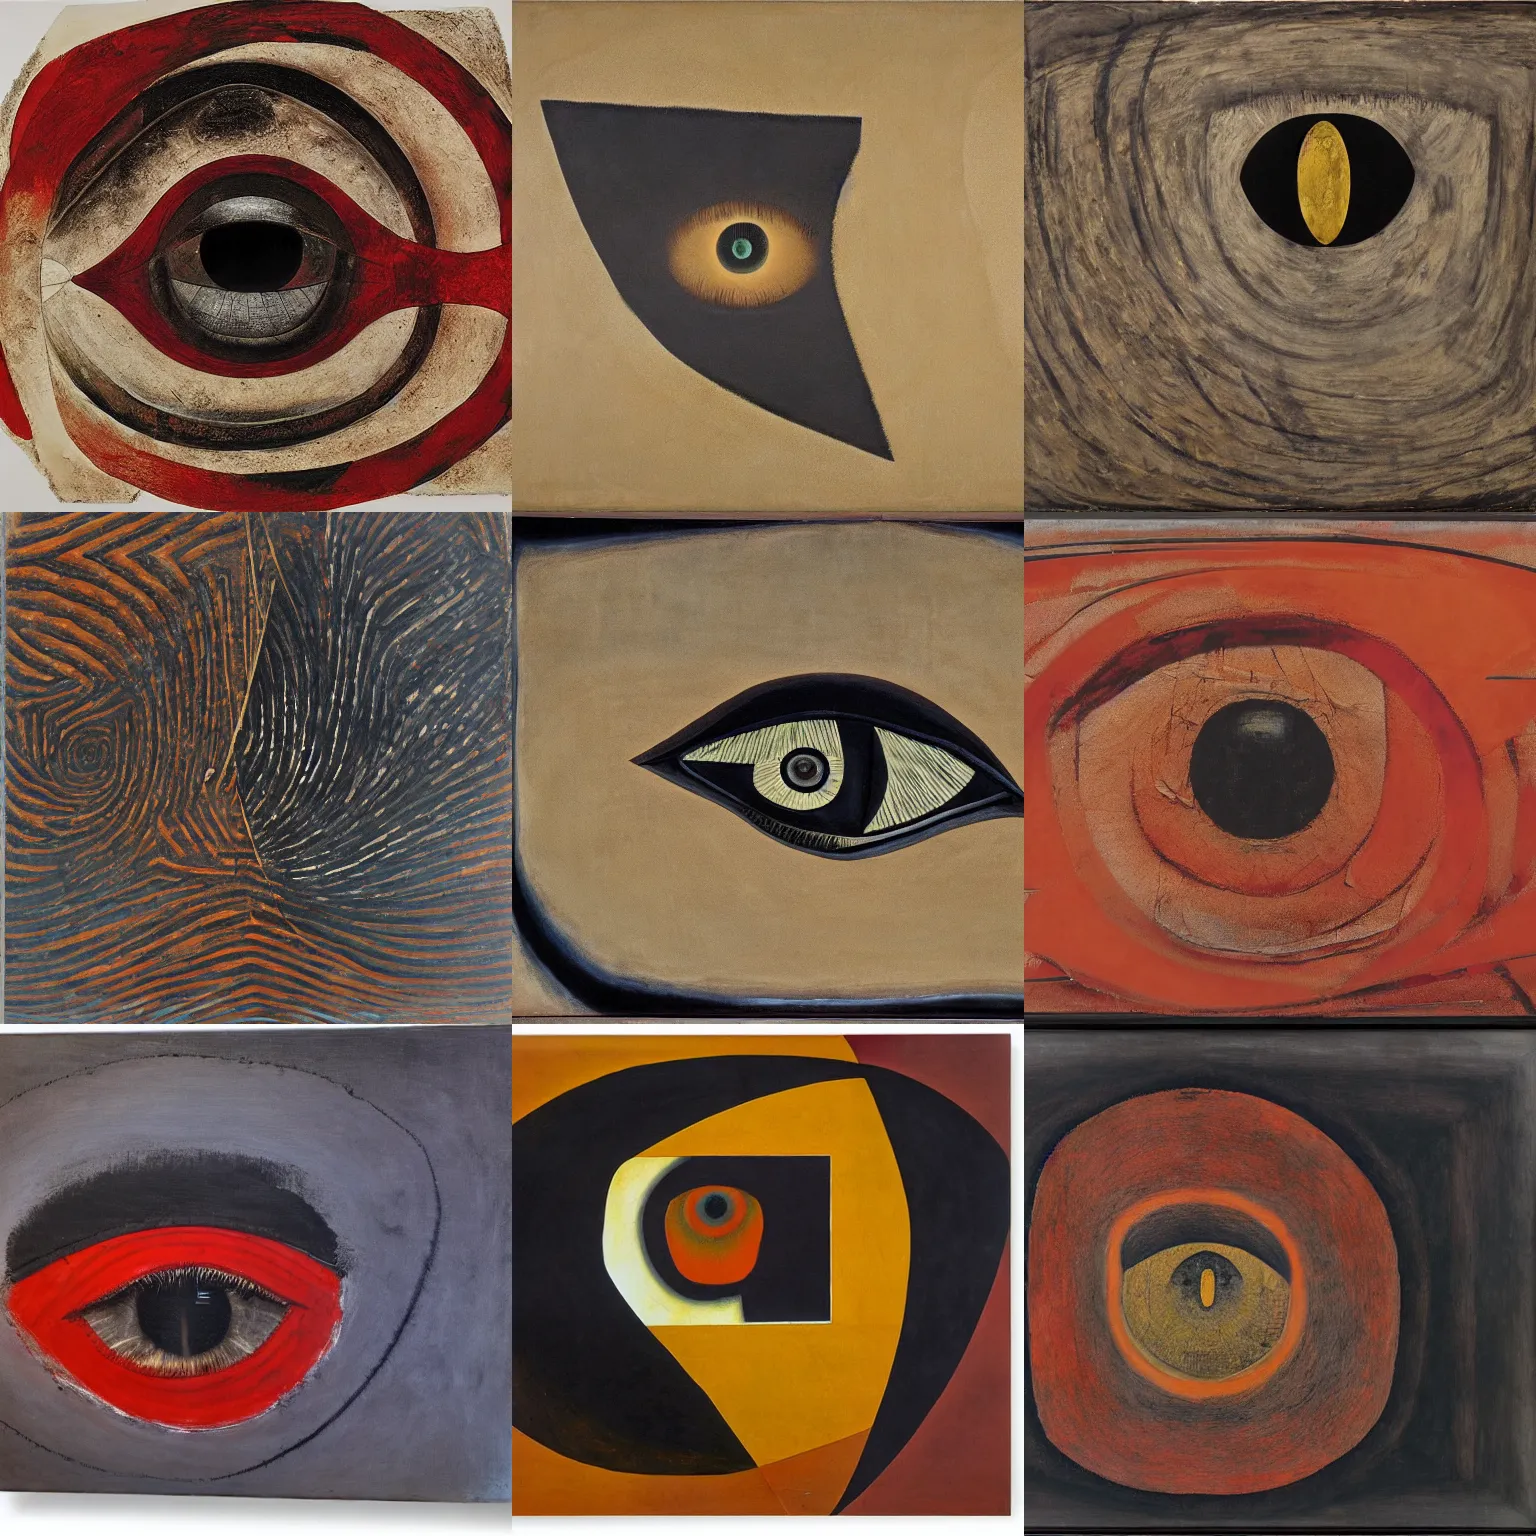 Prompt: The all seing eye by Alberto Burri, painterly brushwork